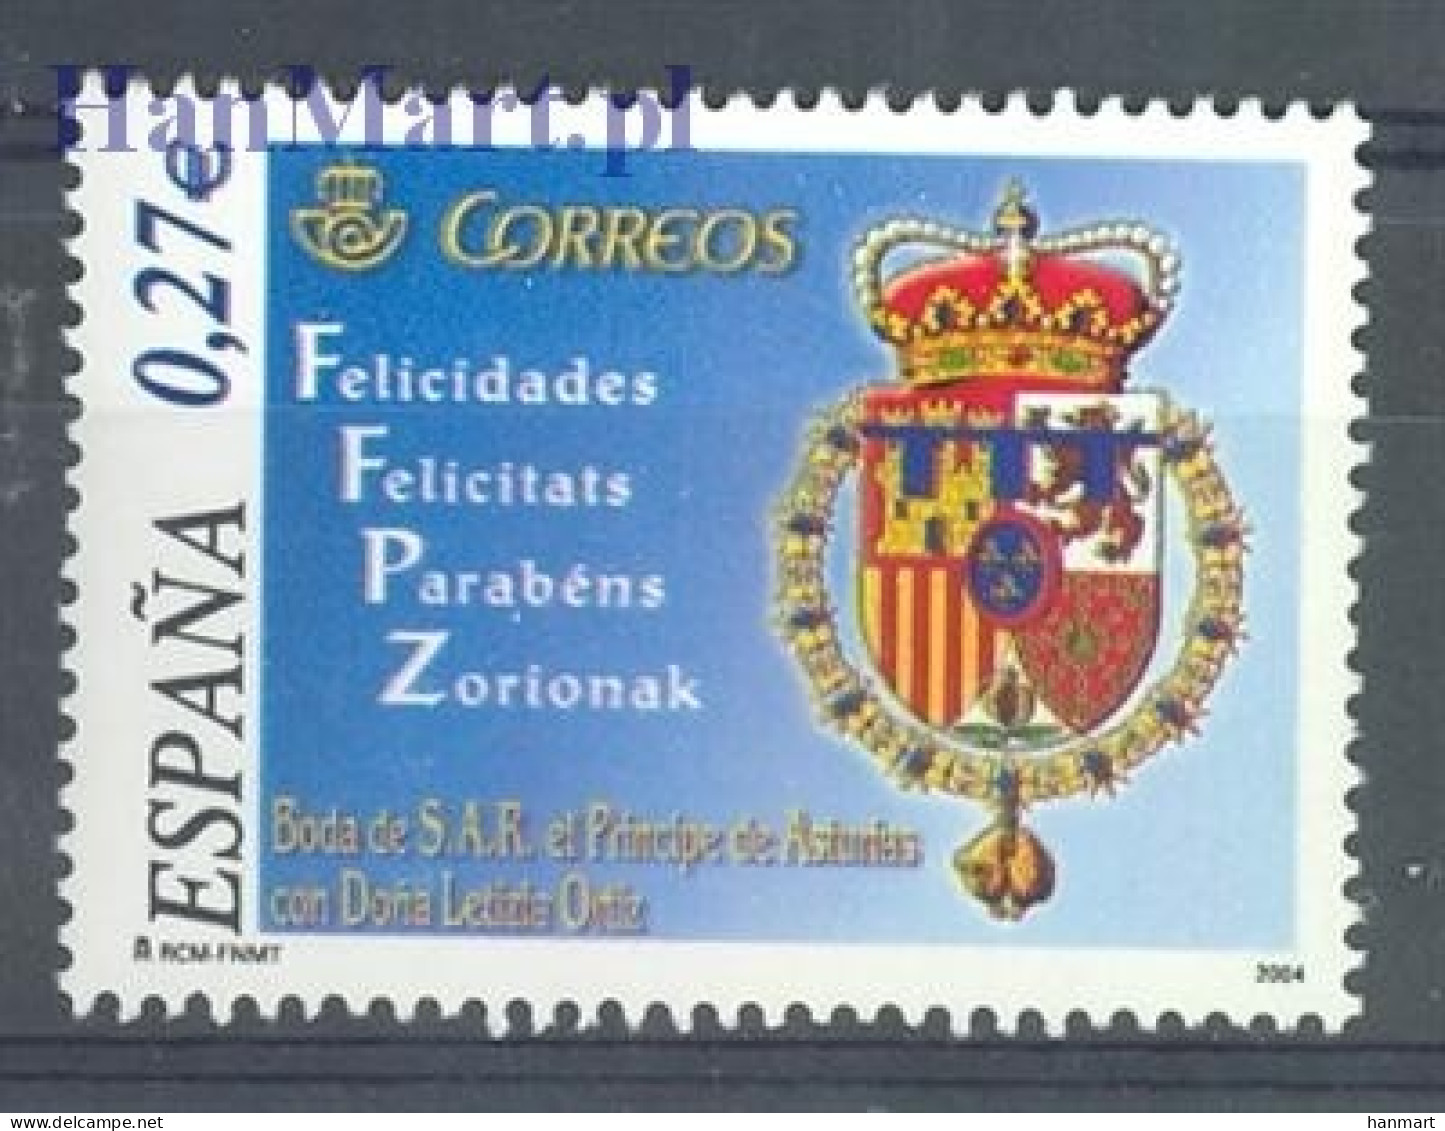 Spain 2004 Mi 3955 MNH  (ZE1 SPN3955) - Timbres